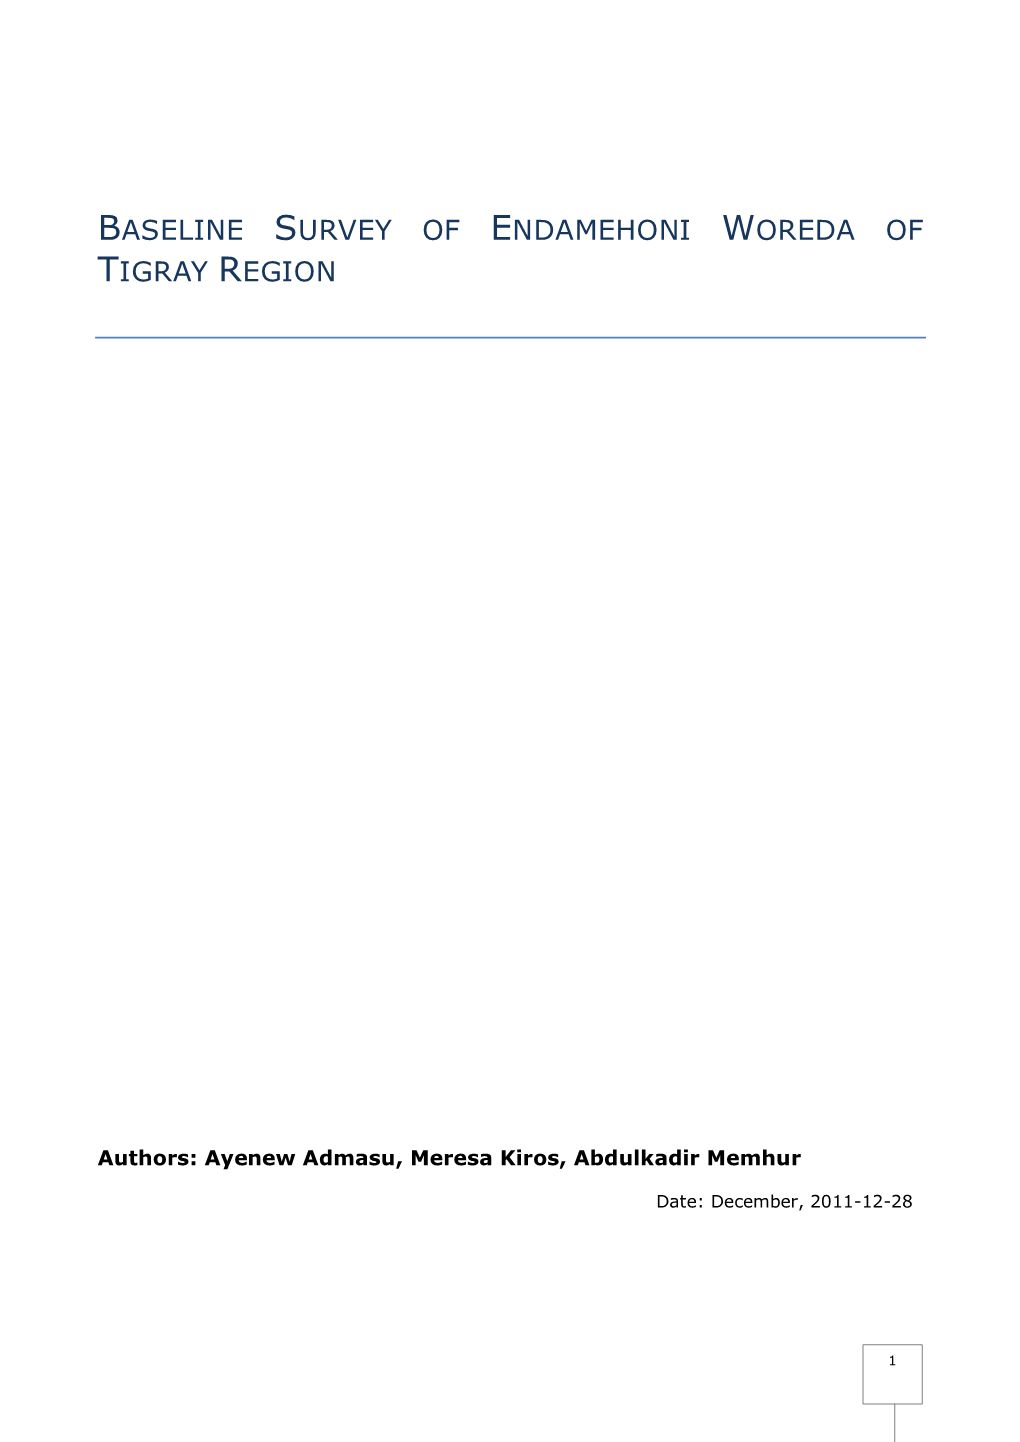 Baseline Survey of Endamehoni Woreda of Tigray Region